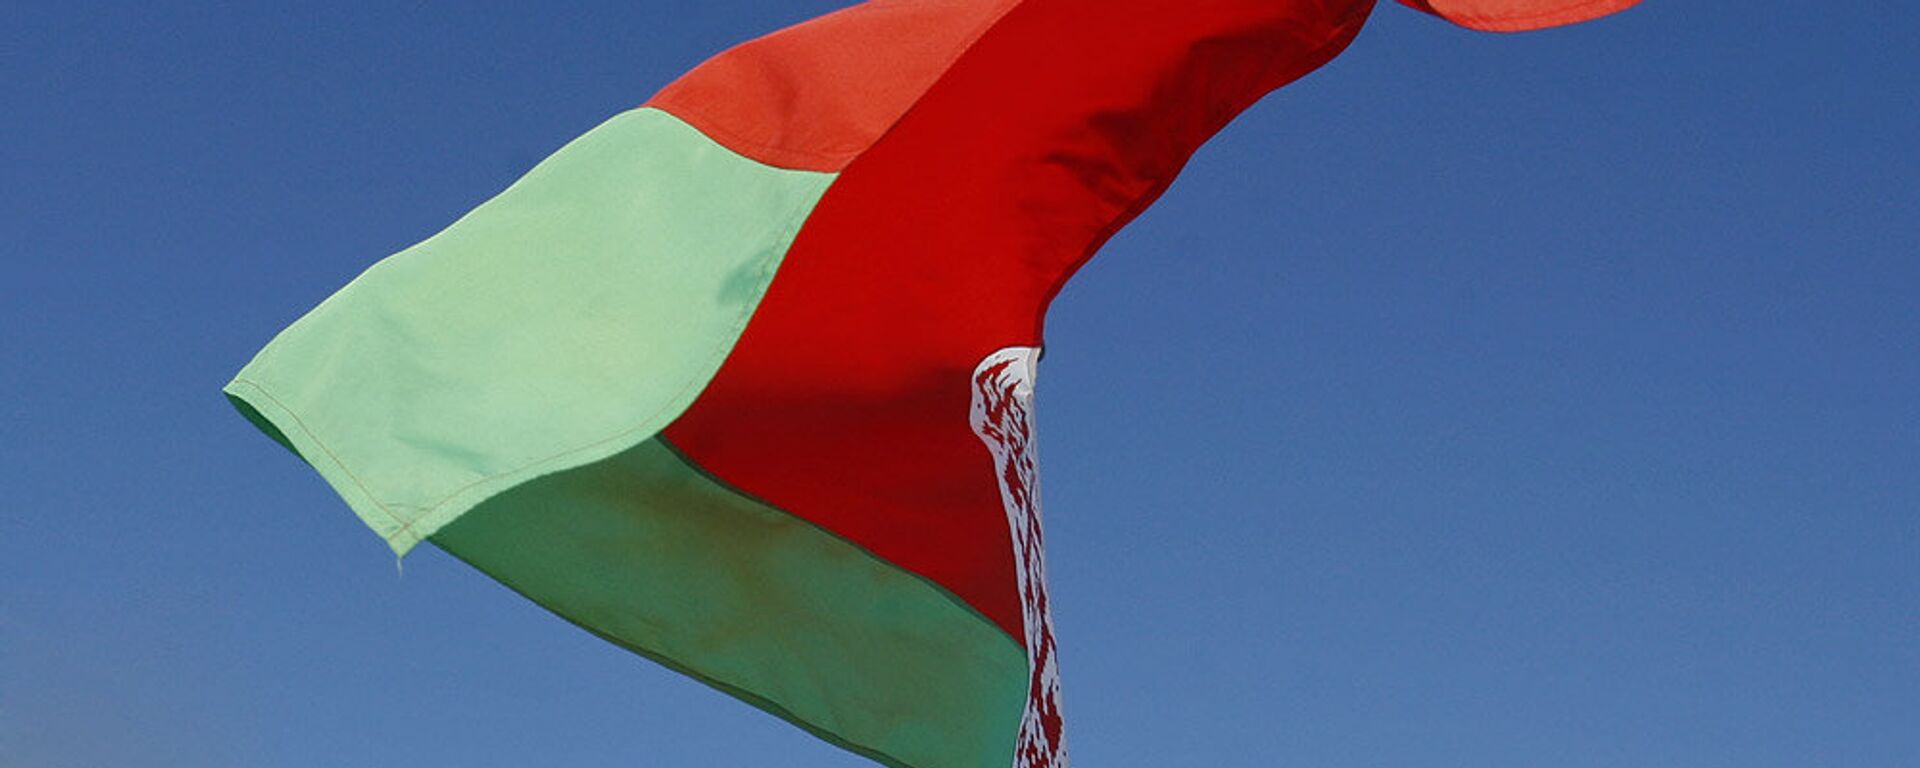 Bandera de Bielorrusia - Sputnik Mundo, 1920, 10.08.2021